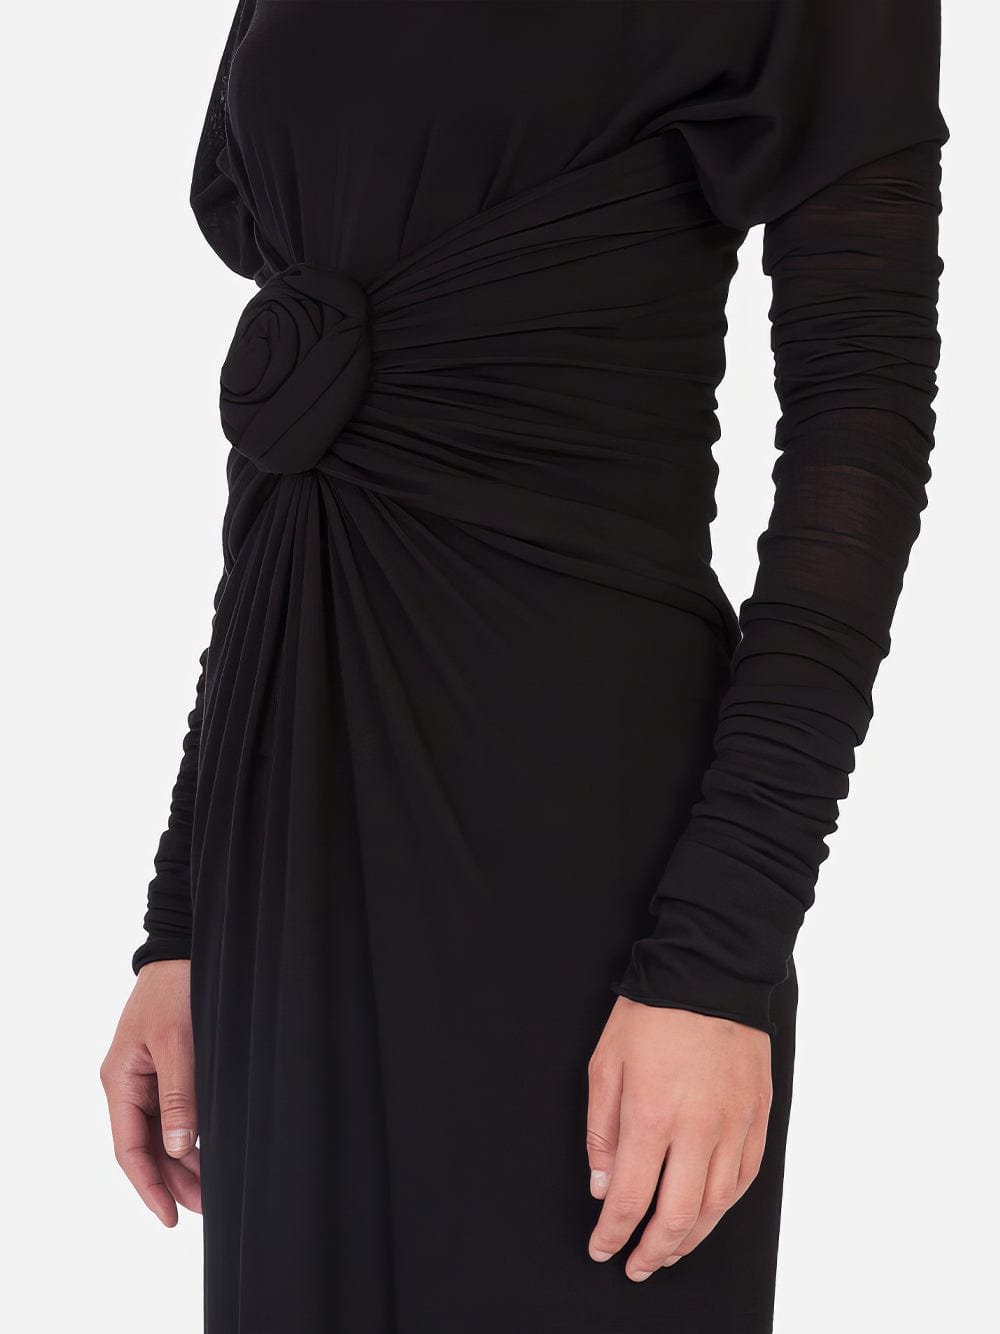 Dolce & Gabbana Front-Tie Midi Dress